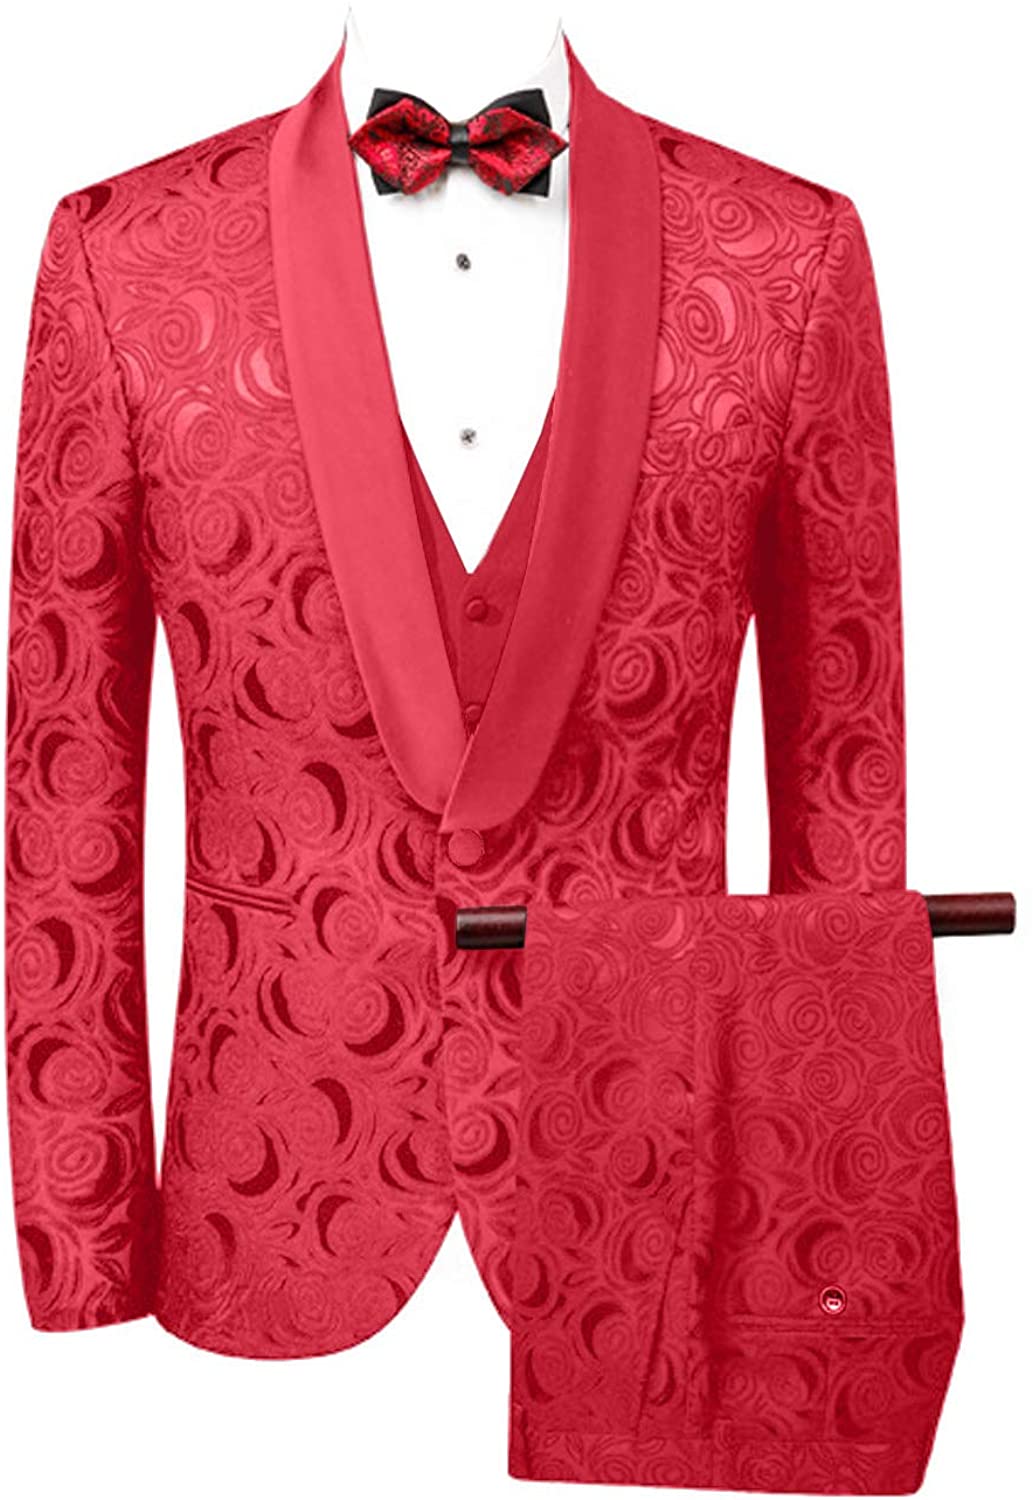 Wemaliyzd Mens 3 Pieces Jacquard Wedding Suit Classic Fit Blazer Vest Pants